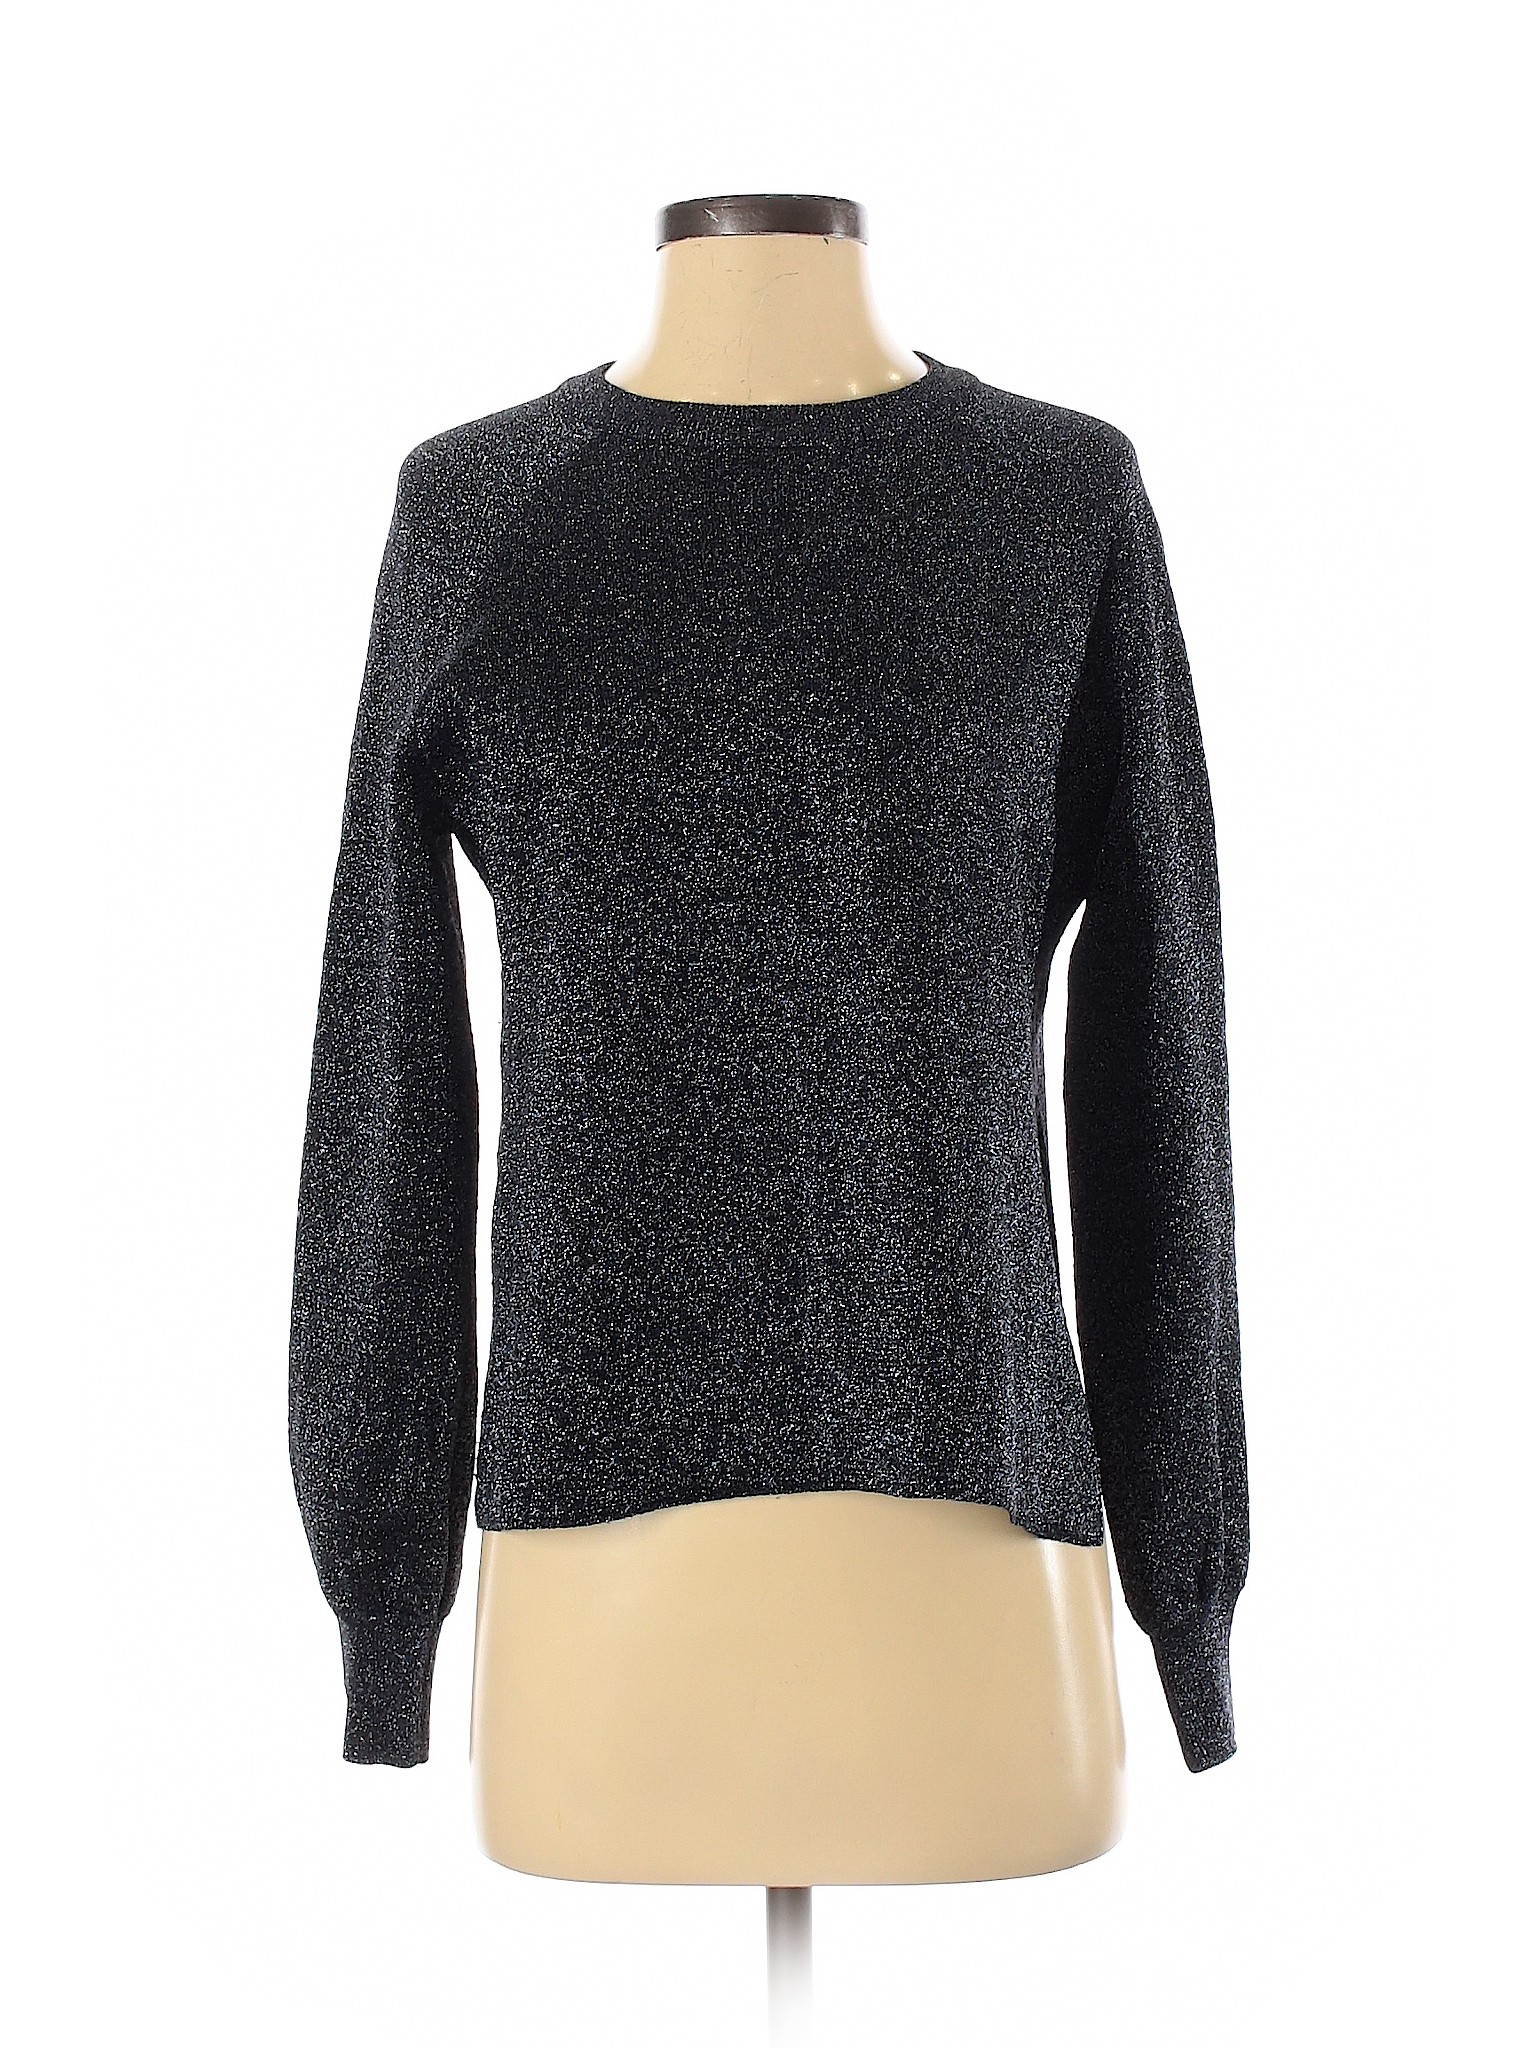 J.Crew Women Silver Pullover Sweater XS | eBay